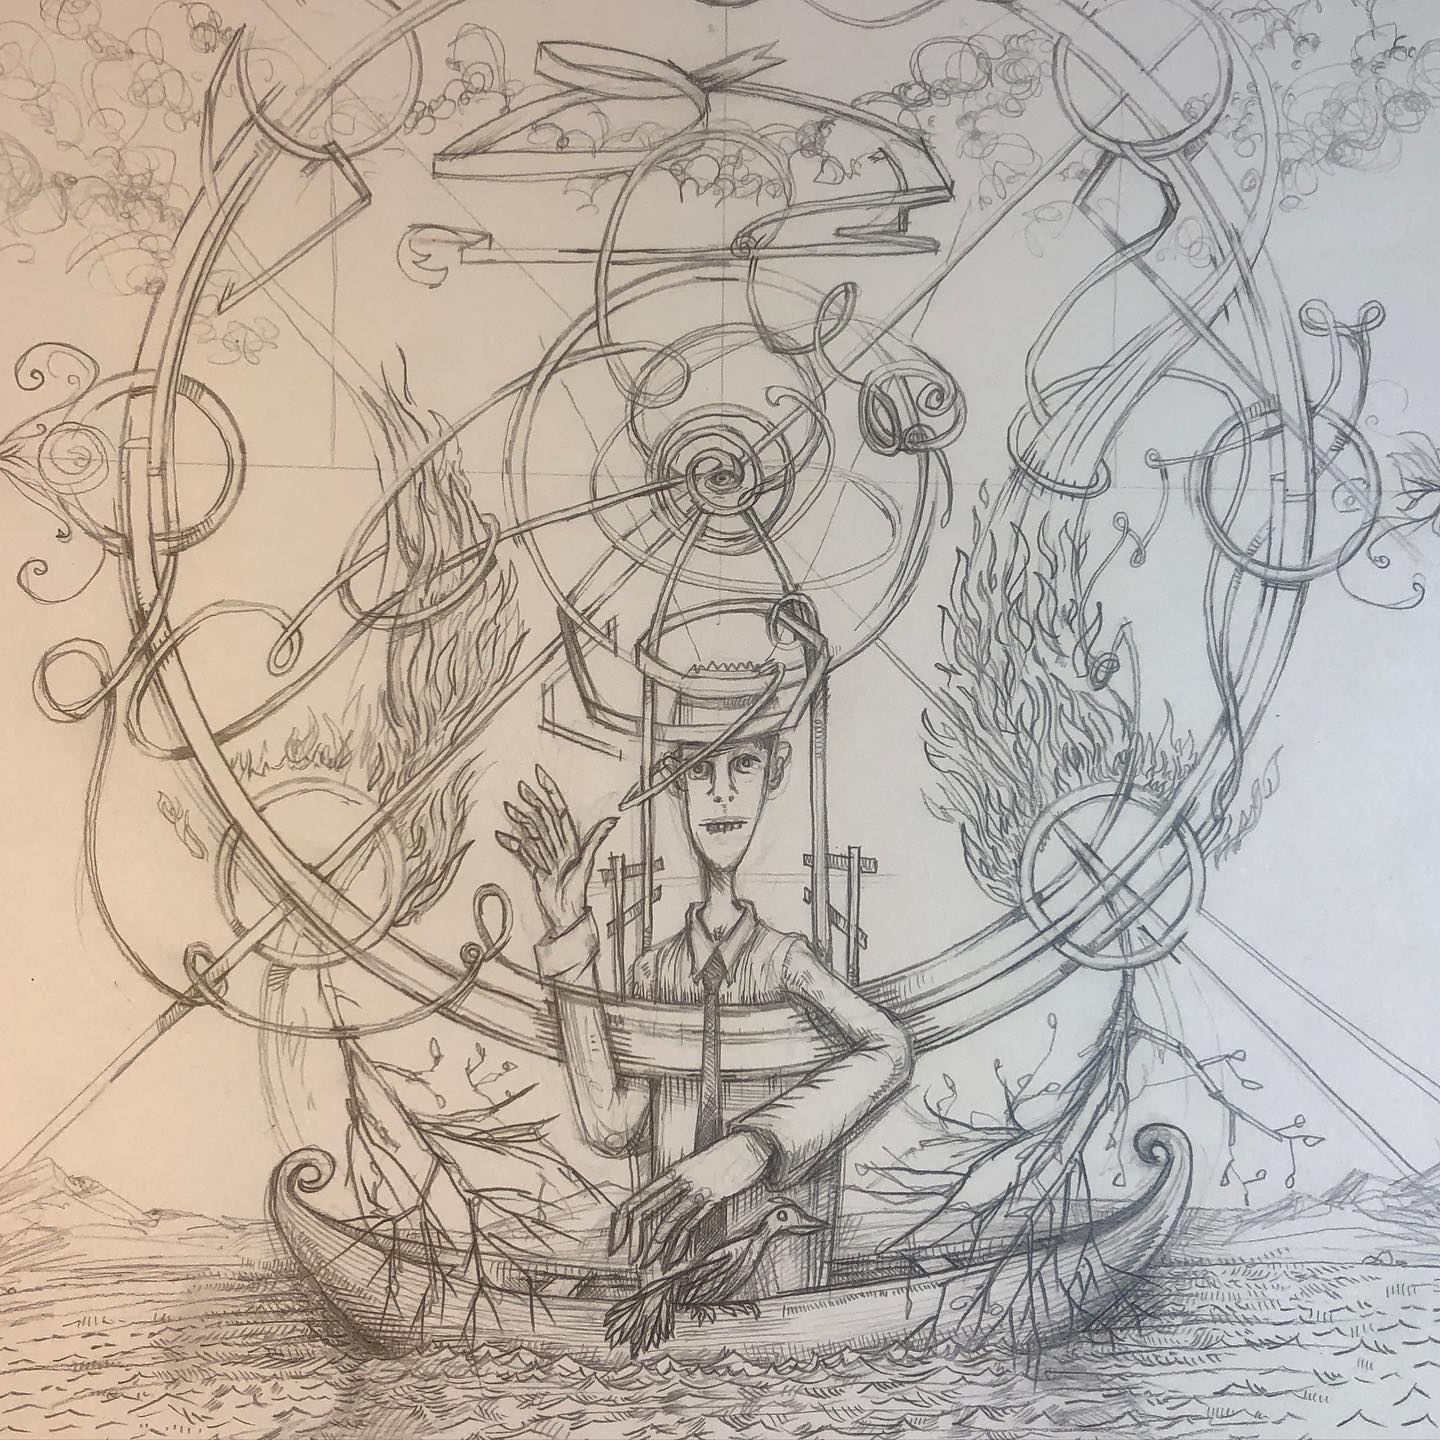 Canoeist - Graphite drawing in progress